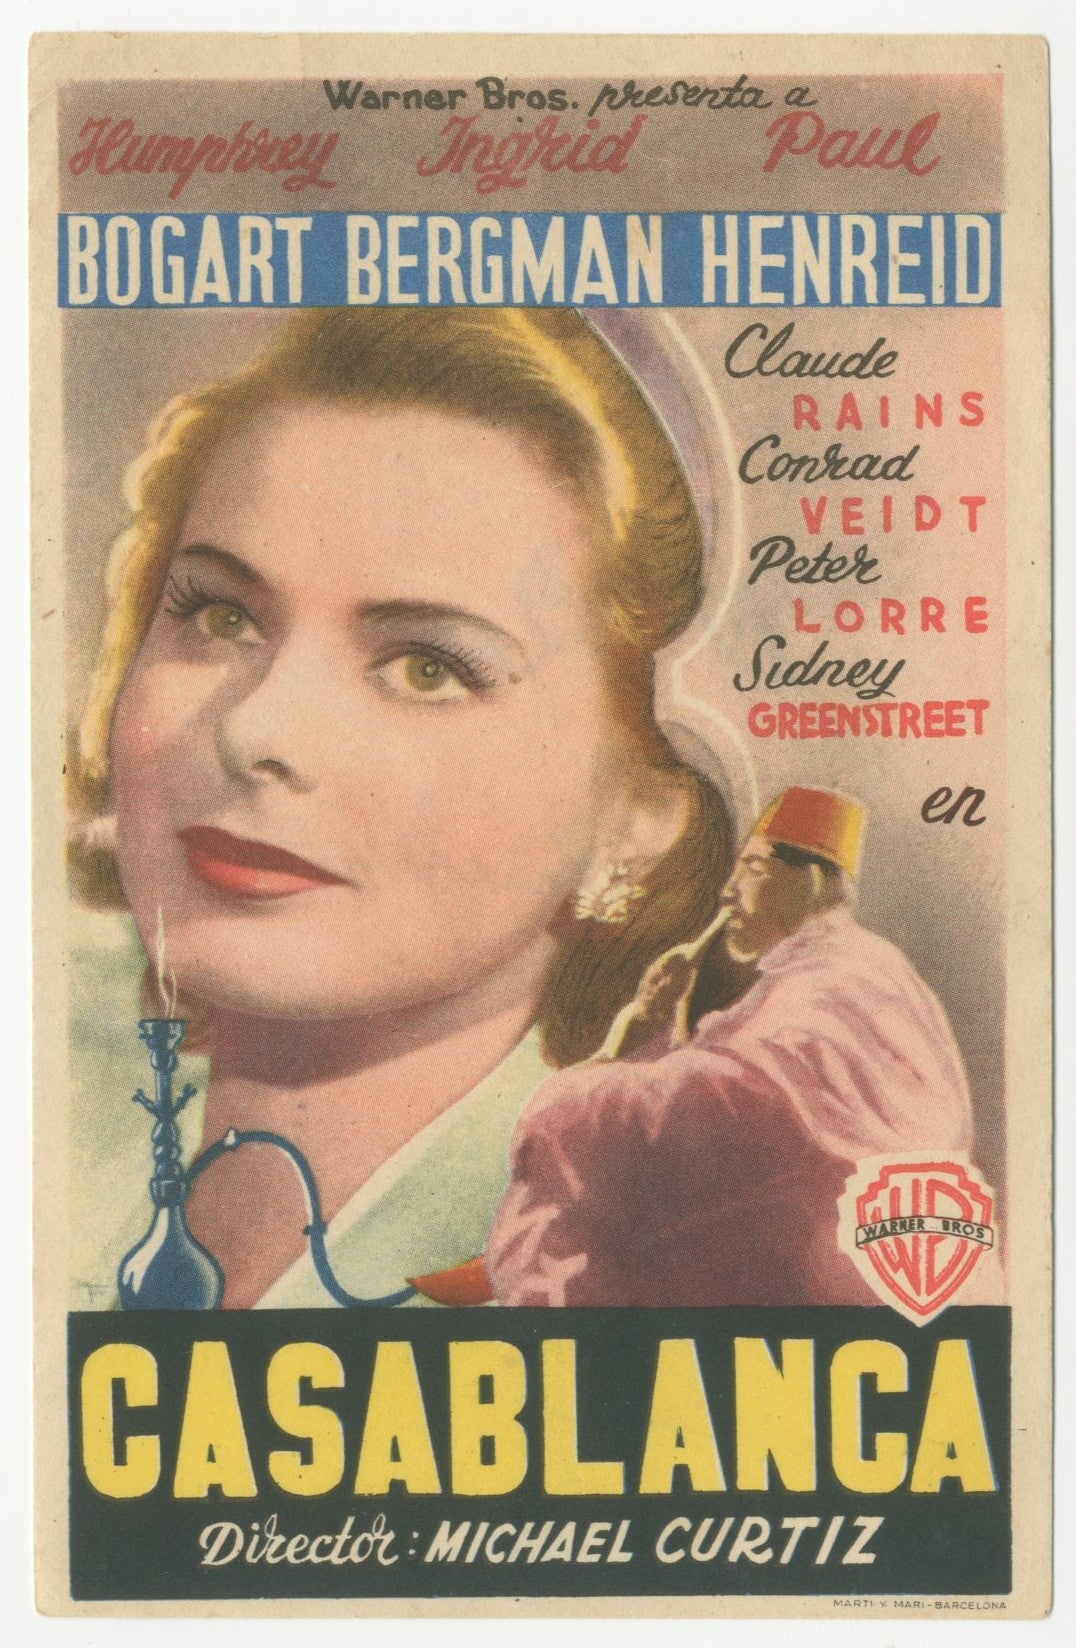 Casablanca Spanish Herald (R 1946) - posterpalace.com